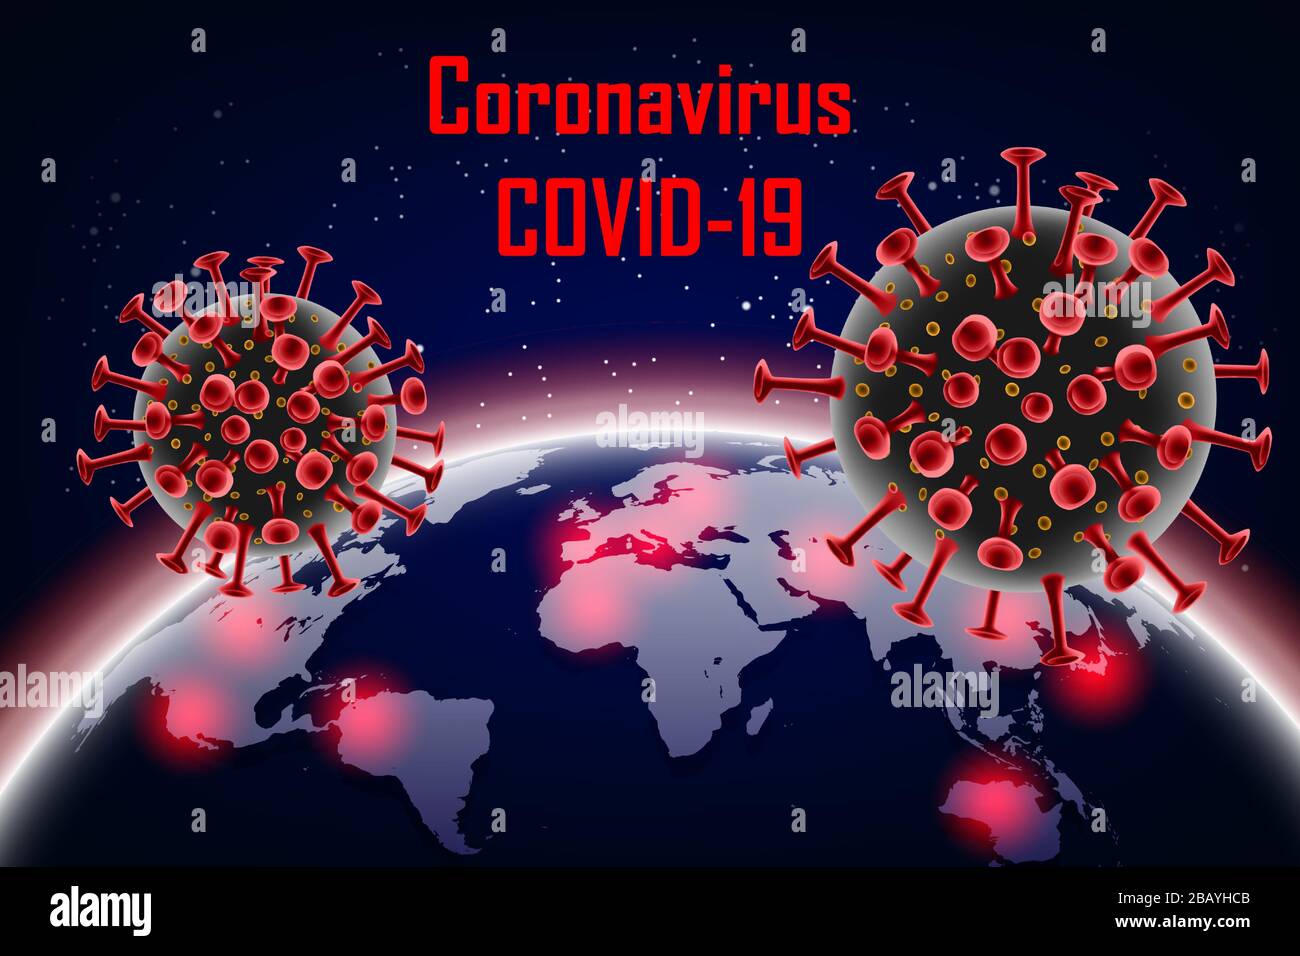 Corona-Virus 2019-ncov mit Erde. Wuhan-Viruserkrankung, Coronavirus aus China auf der ganzen Welt. Abbildung: Vektor des roten Moleküls der Coronavirus-Zelle. Stock Vektor